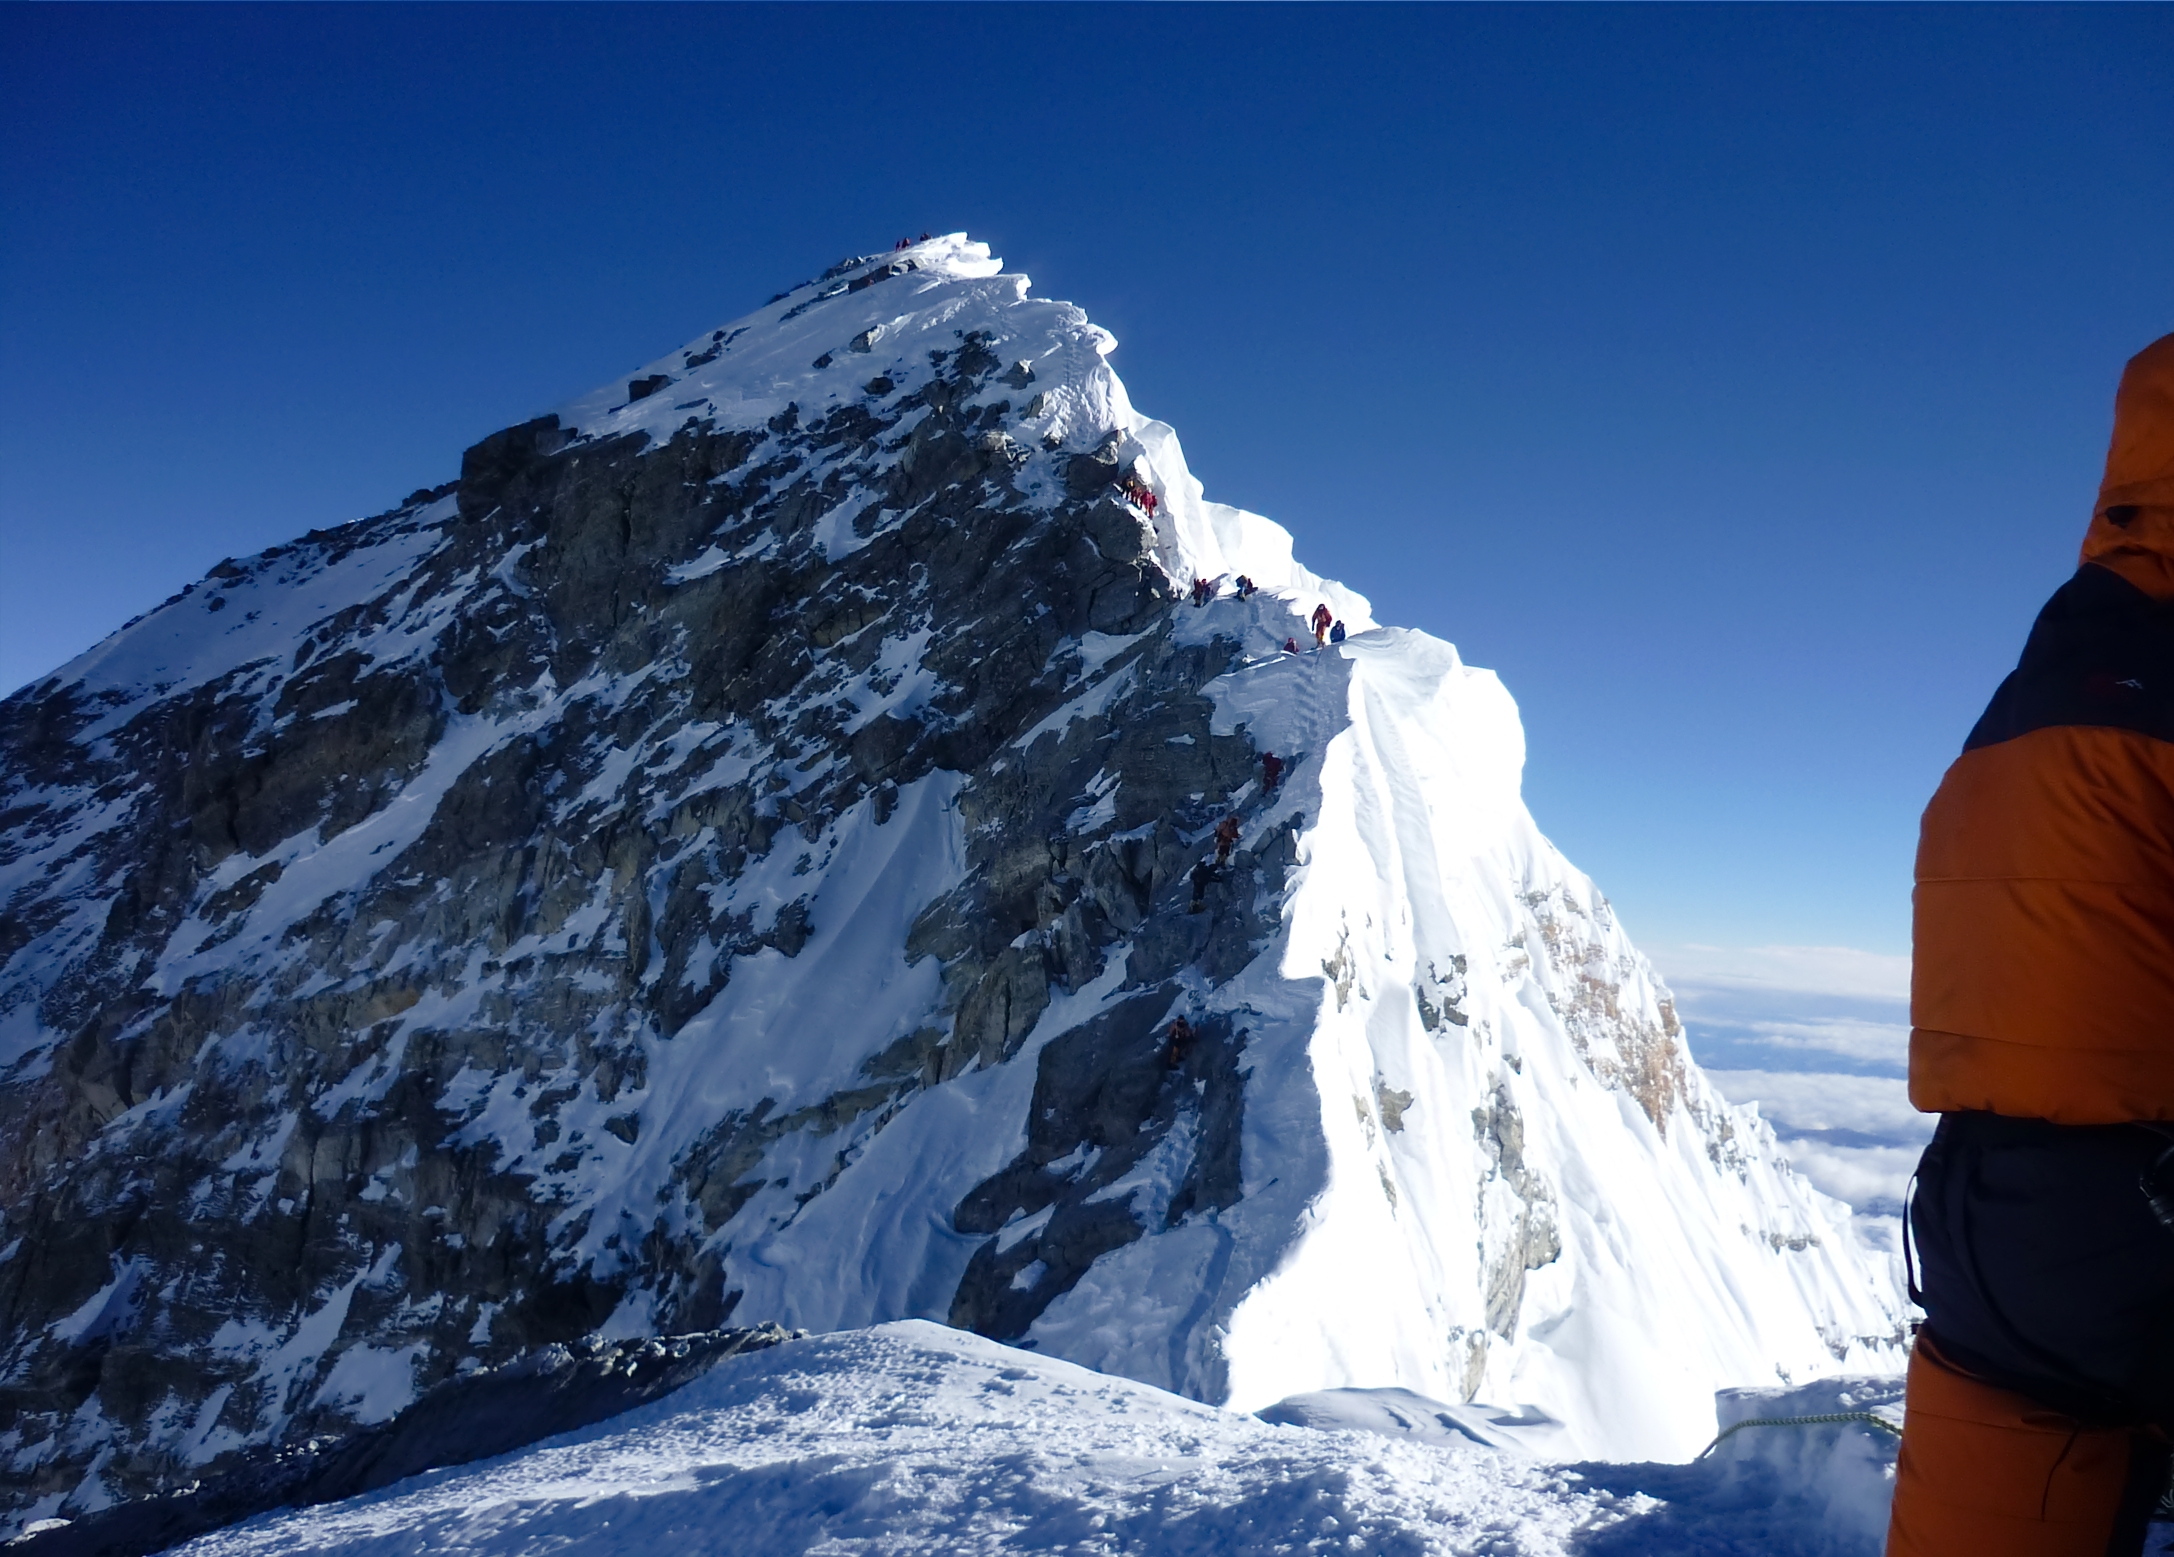 https://www.adventurealternative.com/media/1313/nepal_everest-summit-ridge-from-south-summit-2011.jpg?height=0&width=0&quality=&mode=Crop&center=0.3111888111888112,0.585&bgcolor=